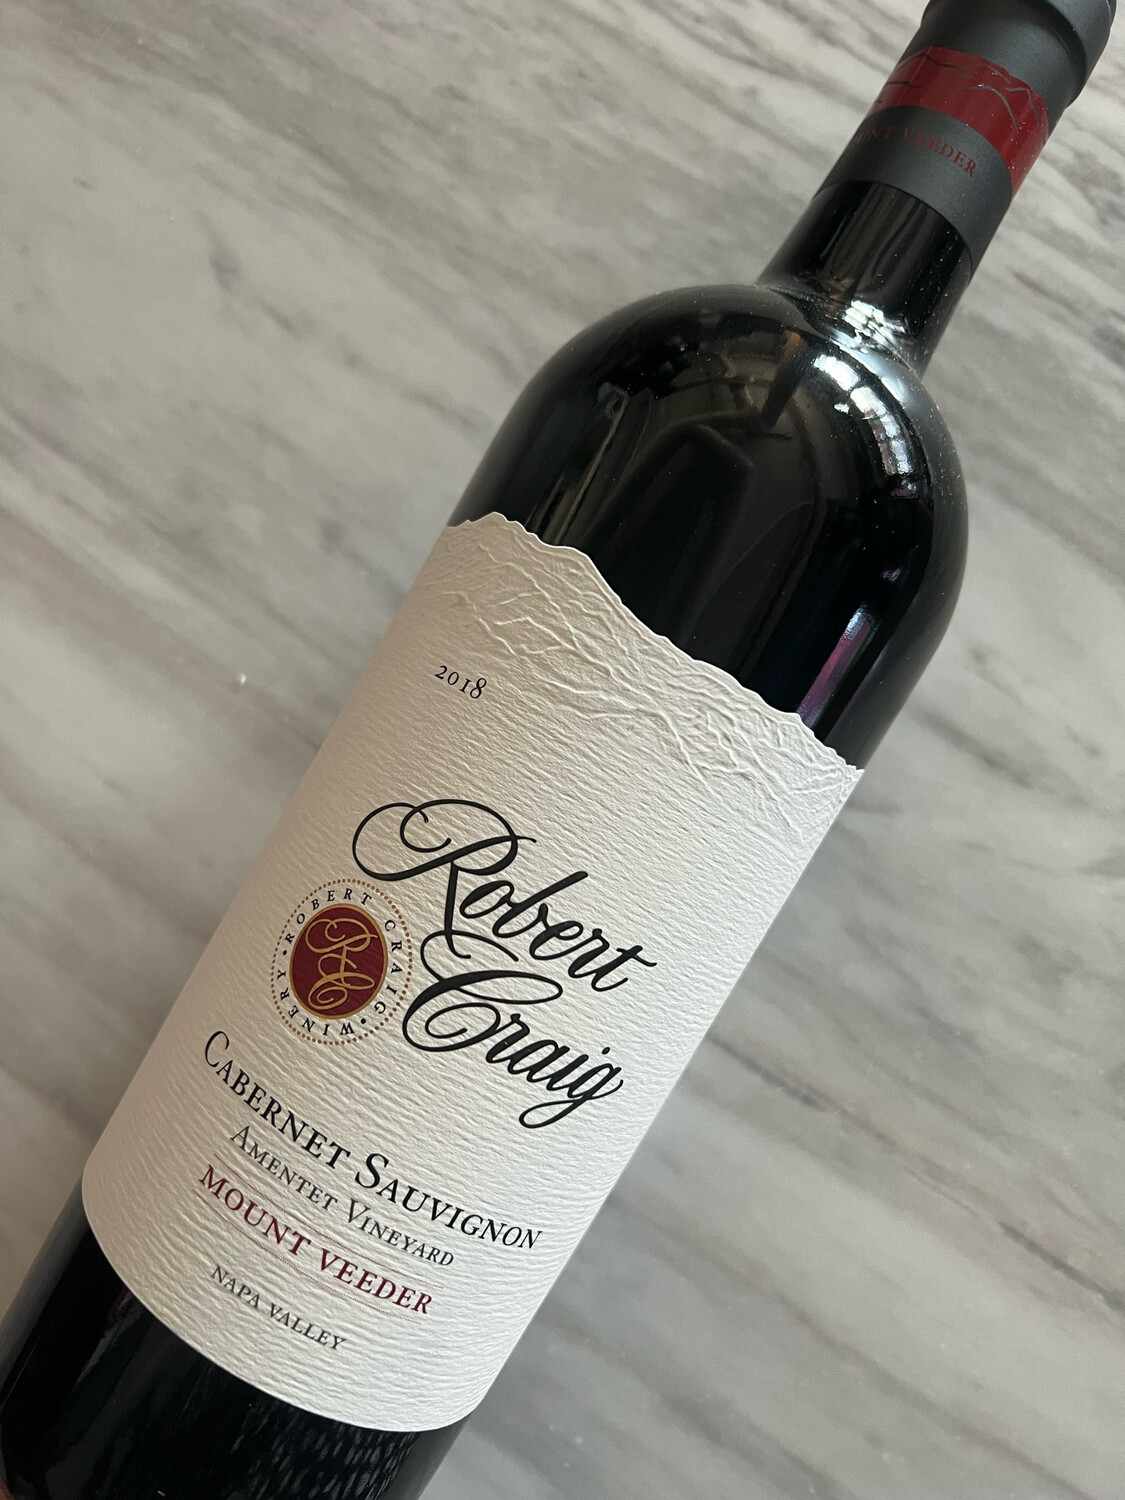 Robert Craig Winery “Amentet Vineyard” Cabernet Sauvignon, Mount Veeder 2018